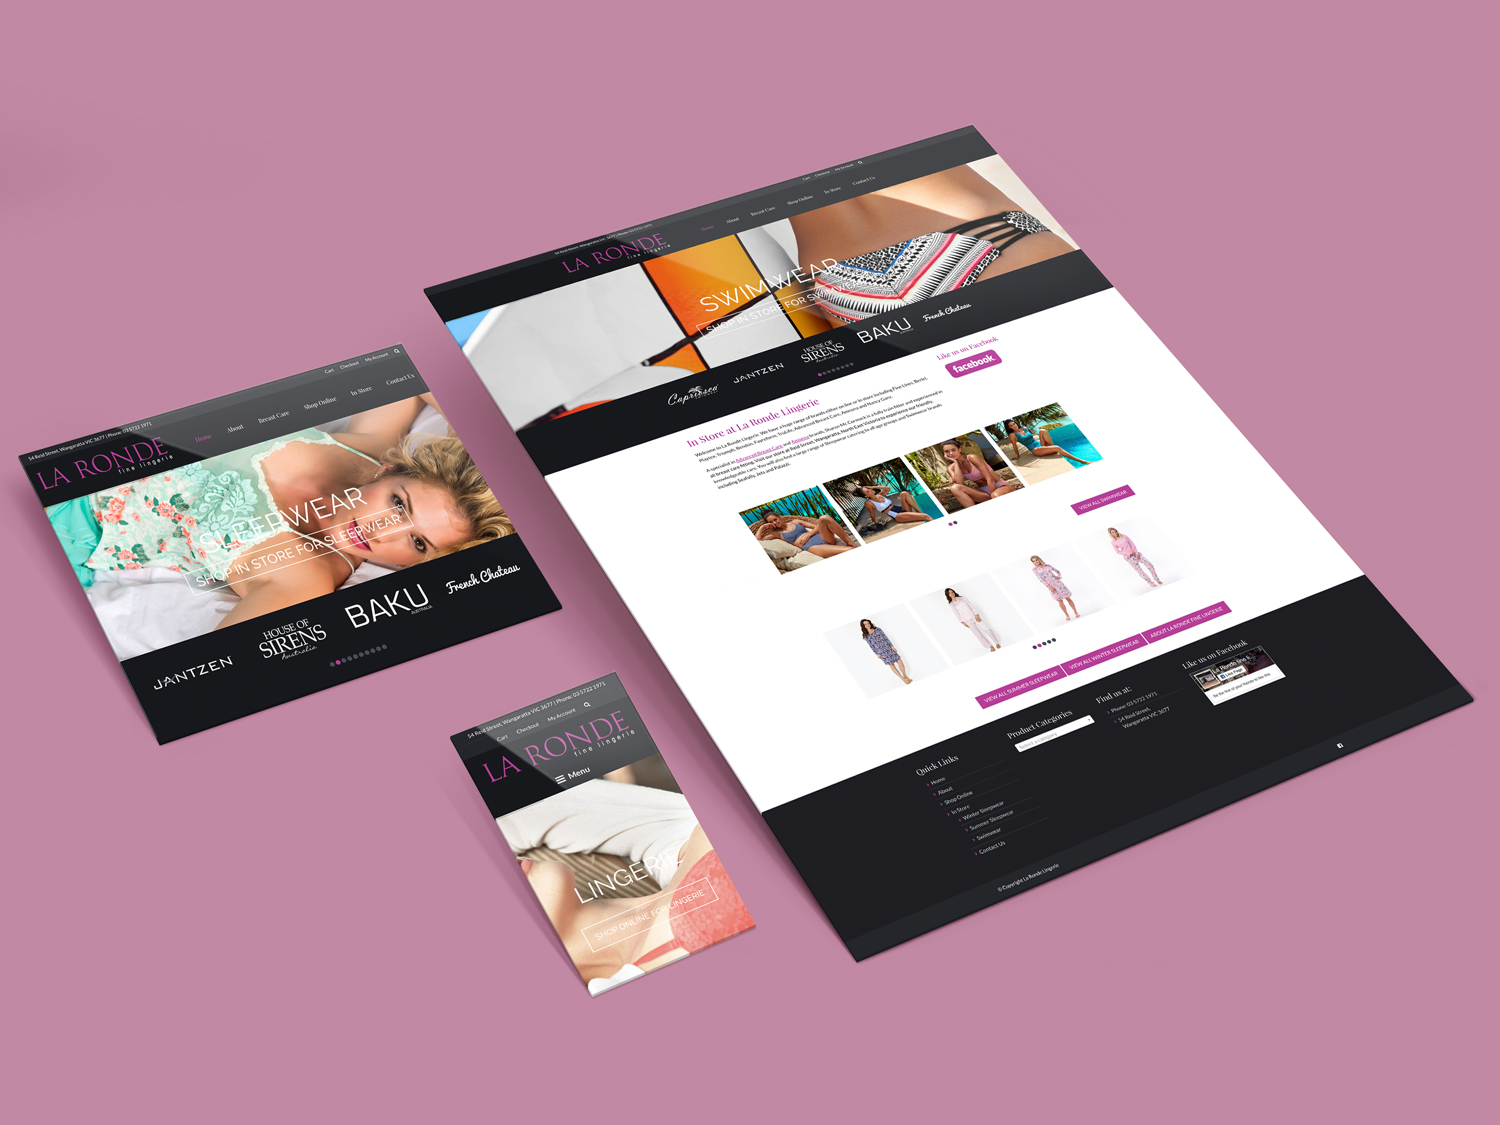 Purple Possum Design – Web Design Wangaratta – La Ronde Lingerie